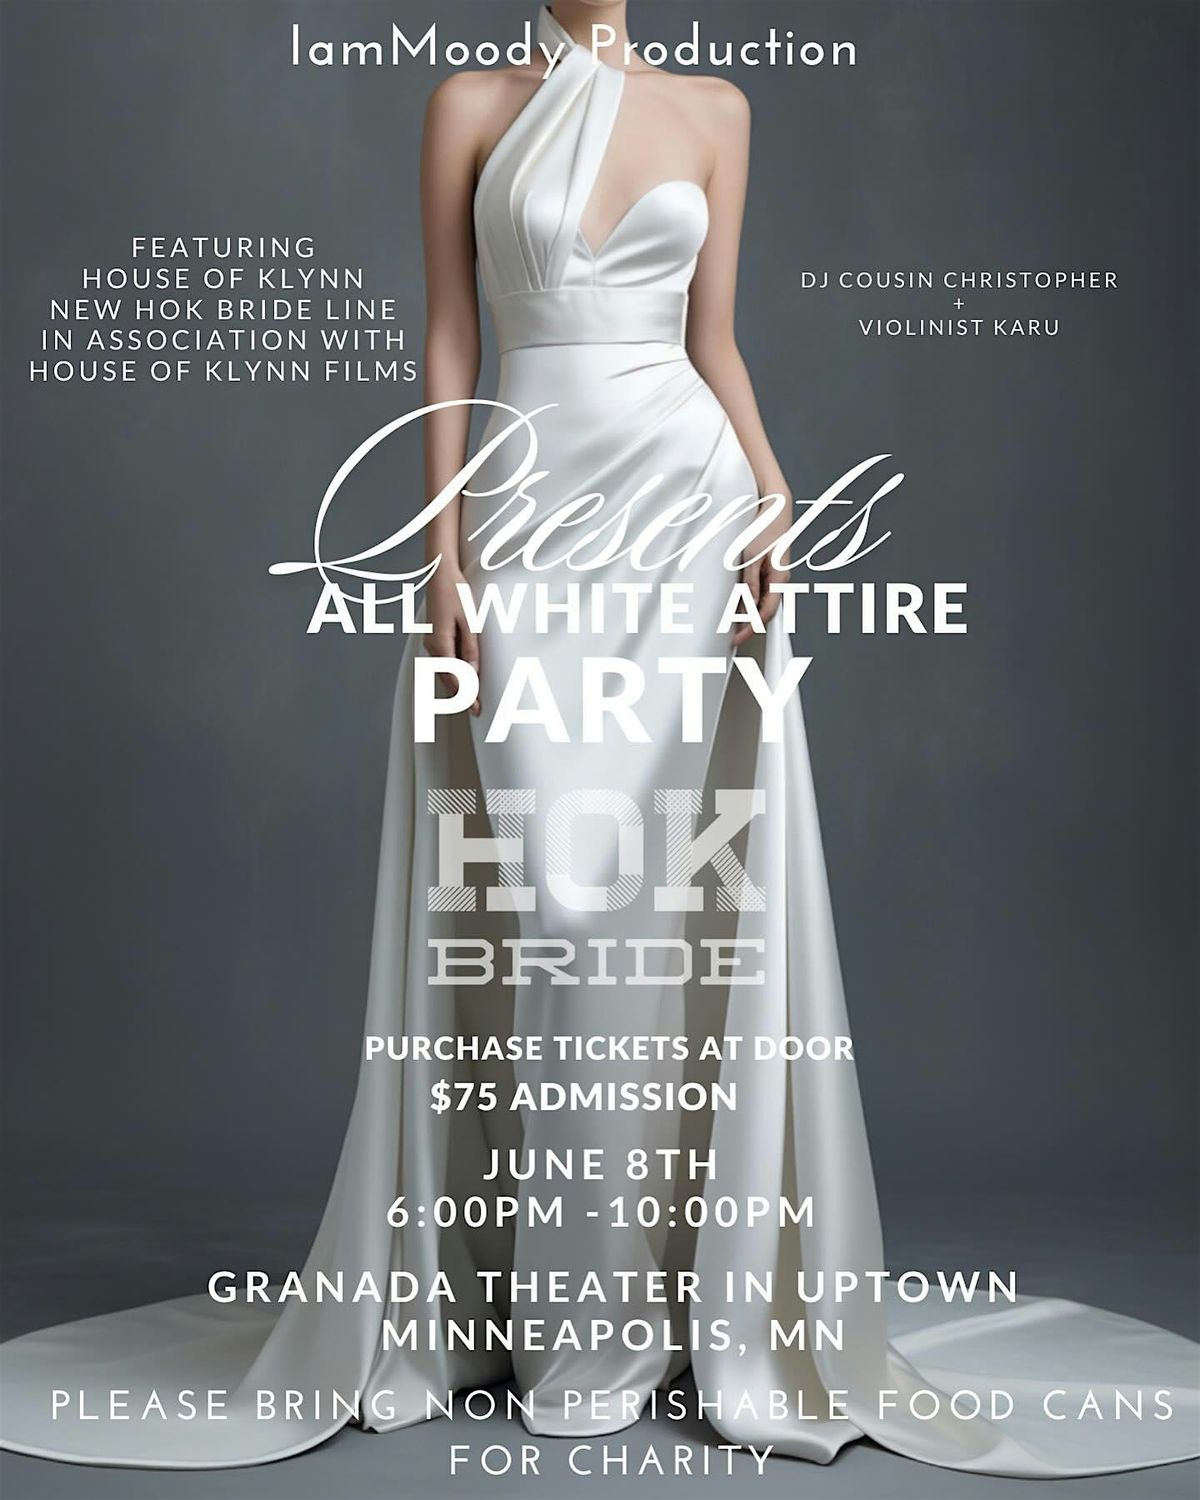 All White Attire Party & House of KLynn Fashion Show